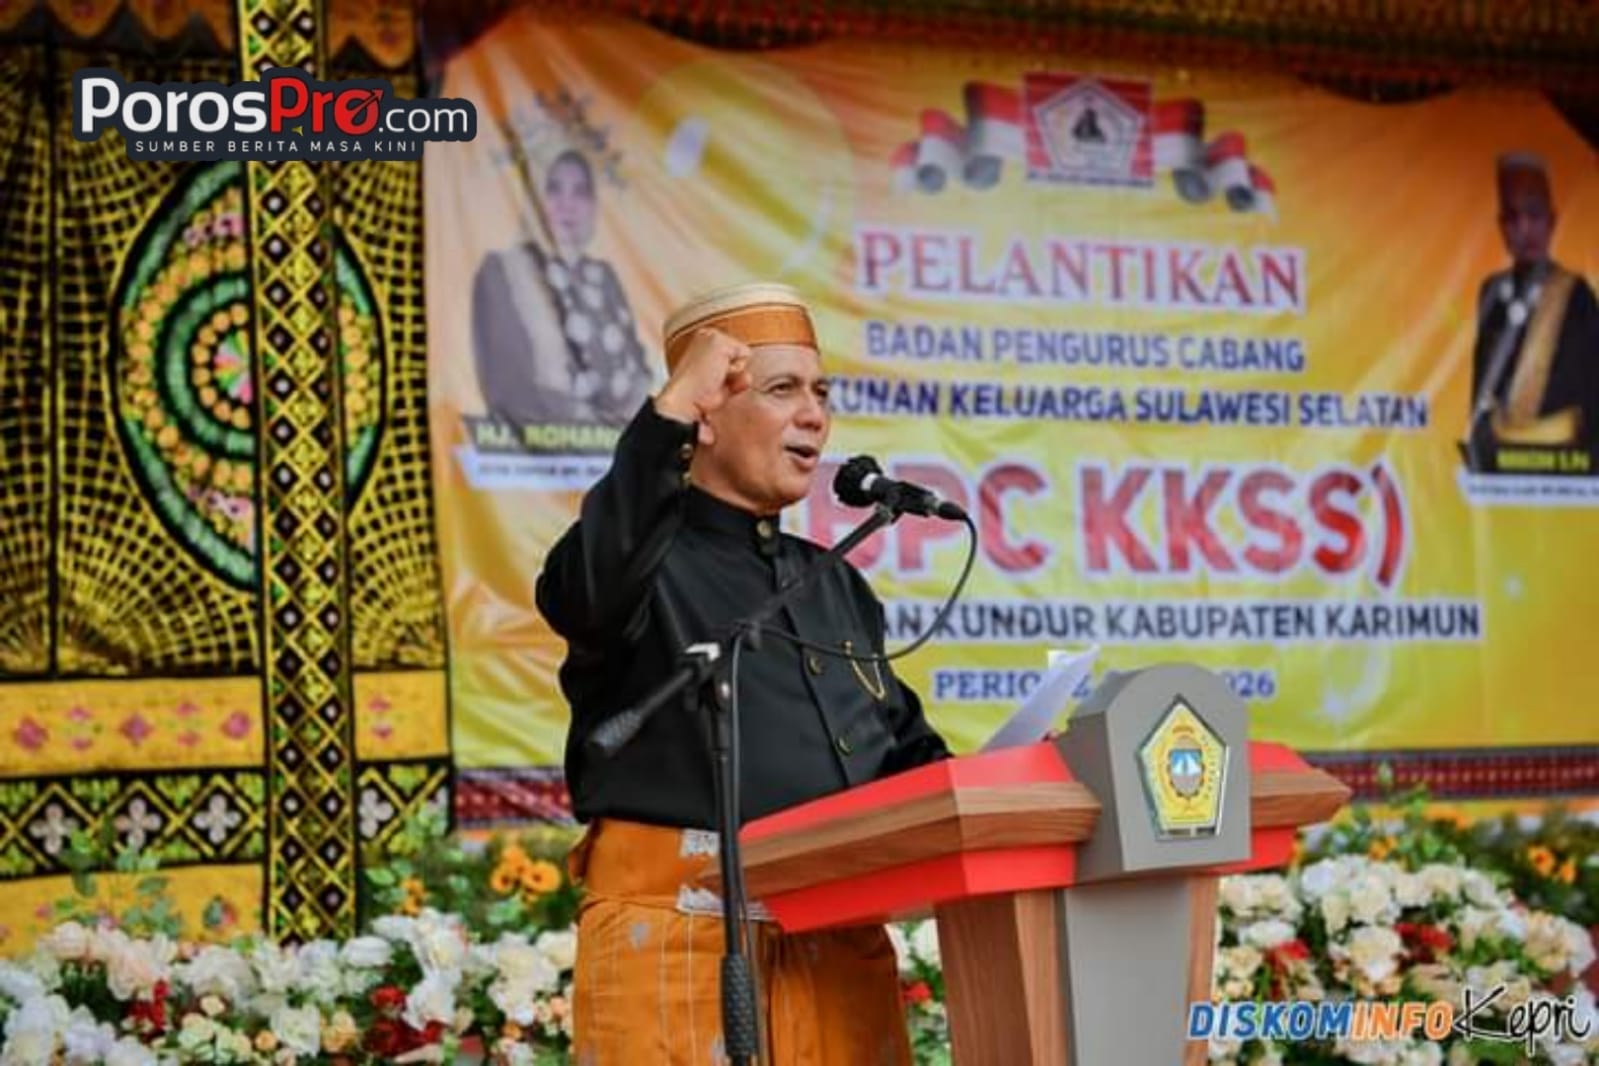 Gubernur Ansar Hadiri Pelantikan BPC KKSS Kecamatan Kundur Kabupaten Karimun